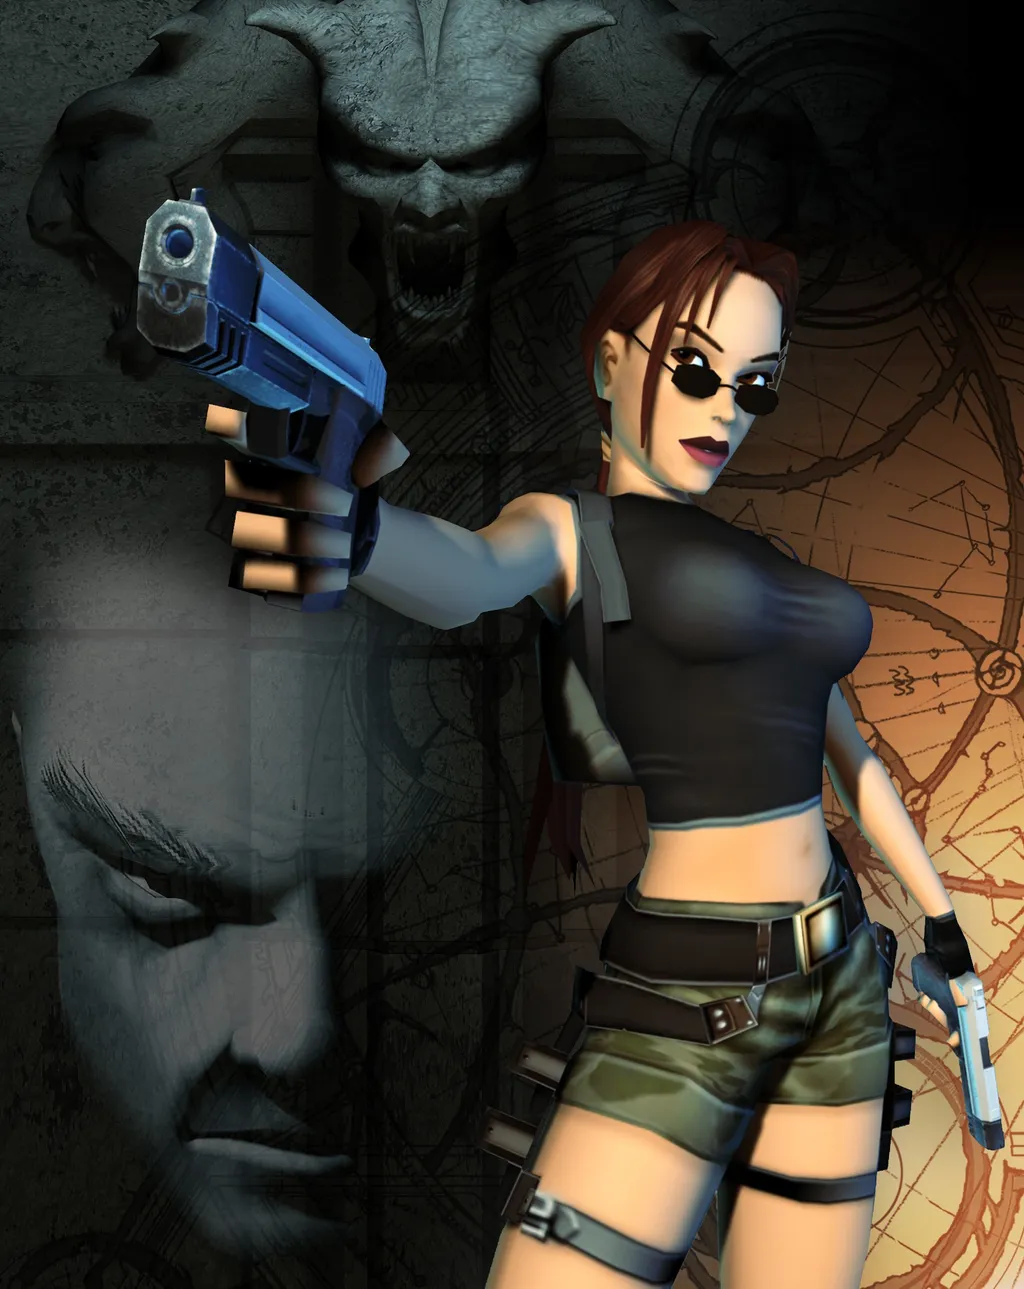 Tomb Raider, Lara Croft, szexi 